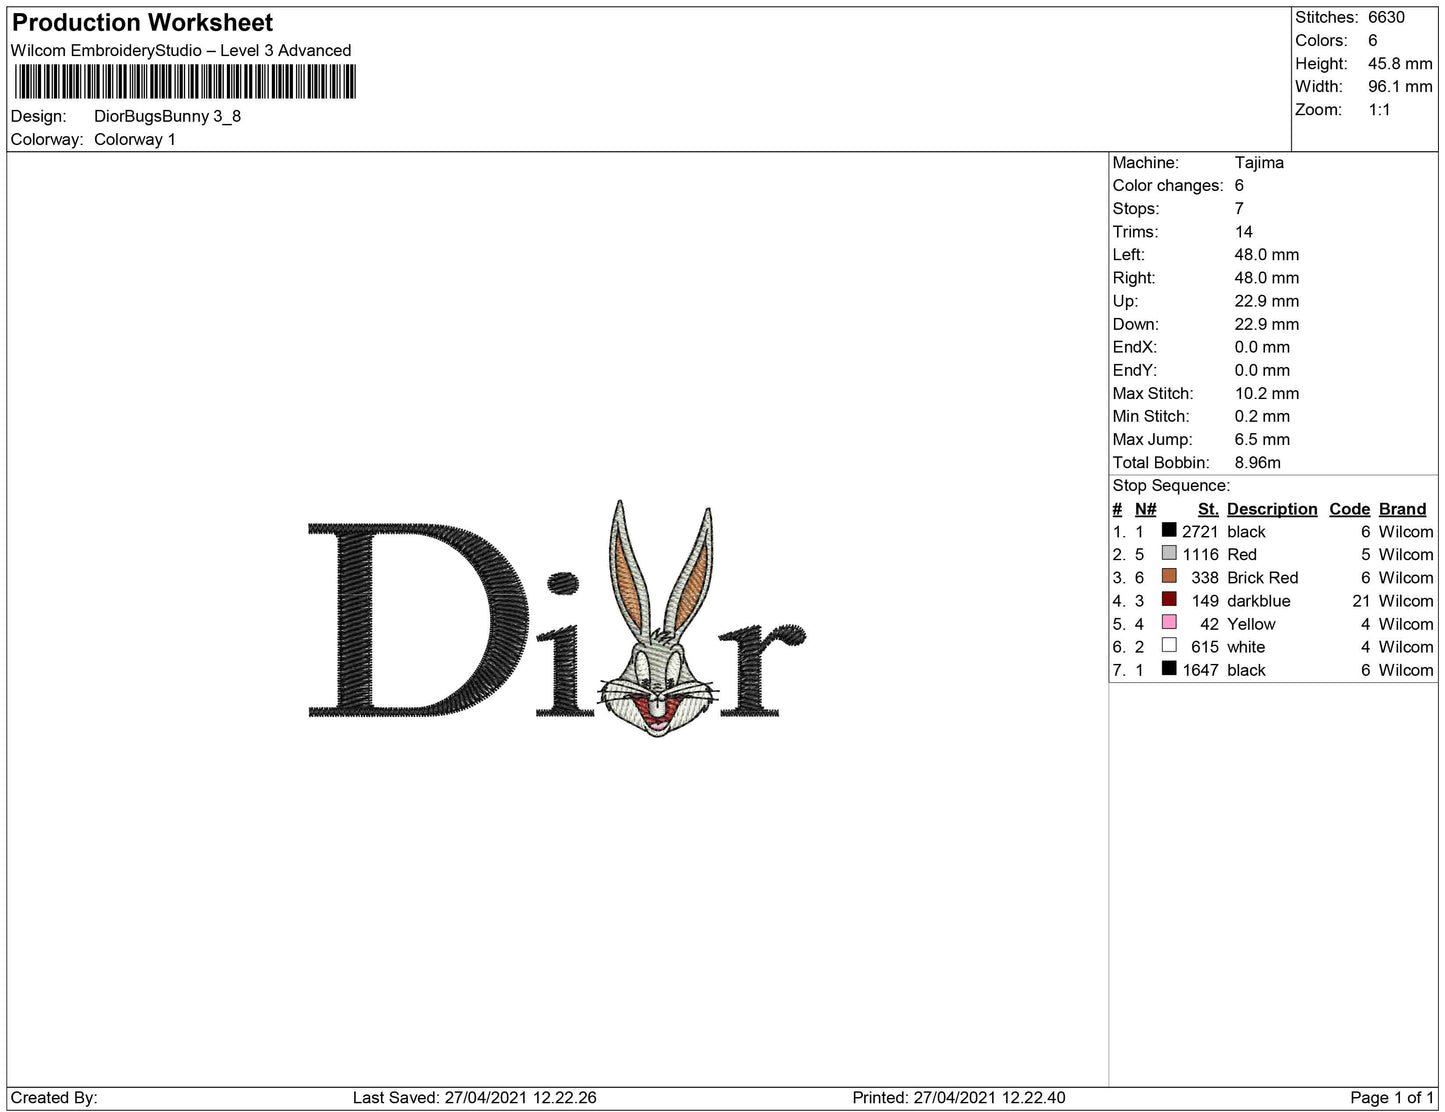 Dior-Bugs Bunny